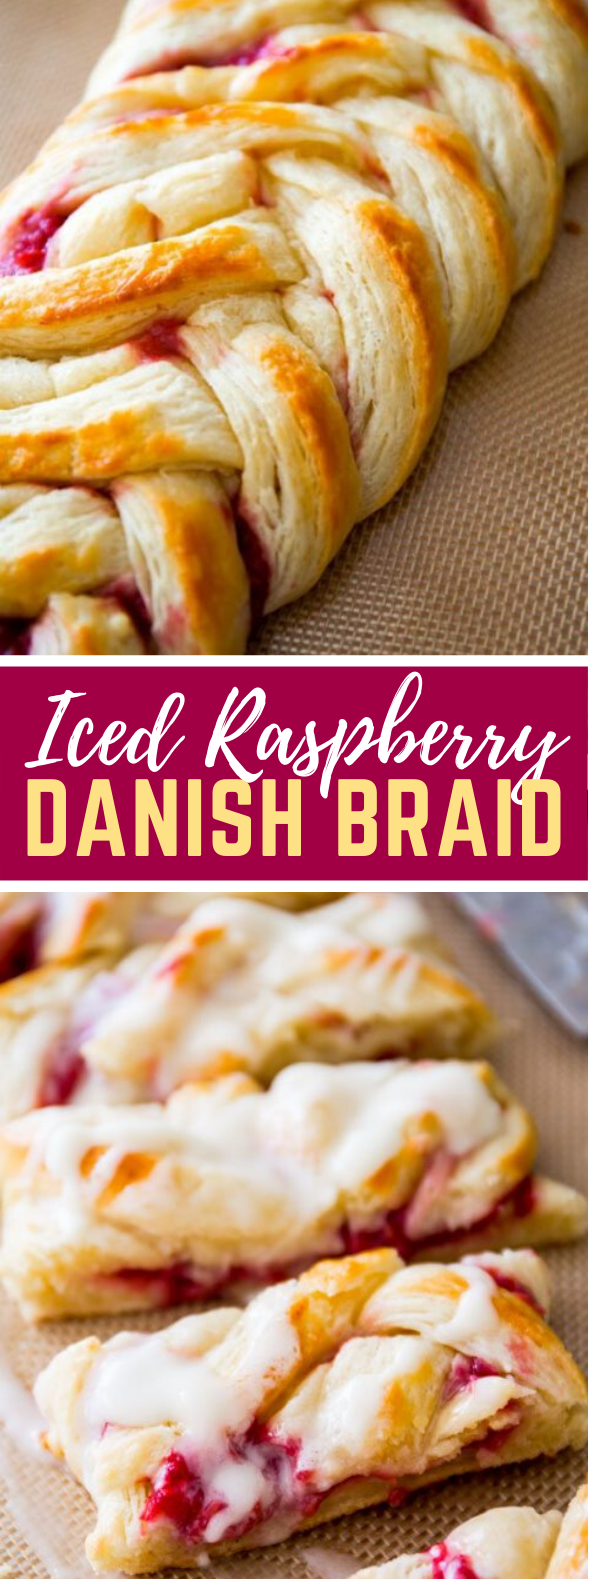 Iced Raspberry Danish Braid #desserts #sweets